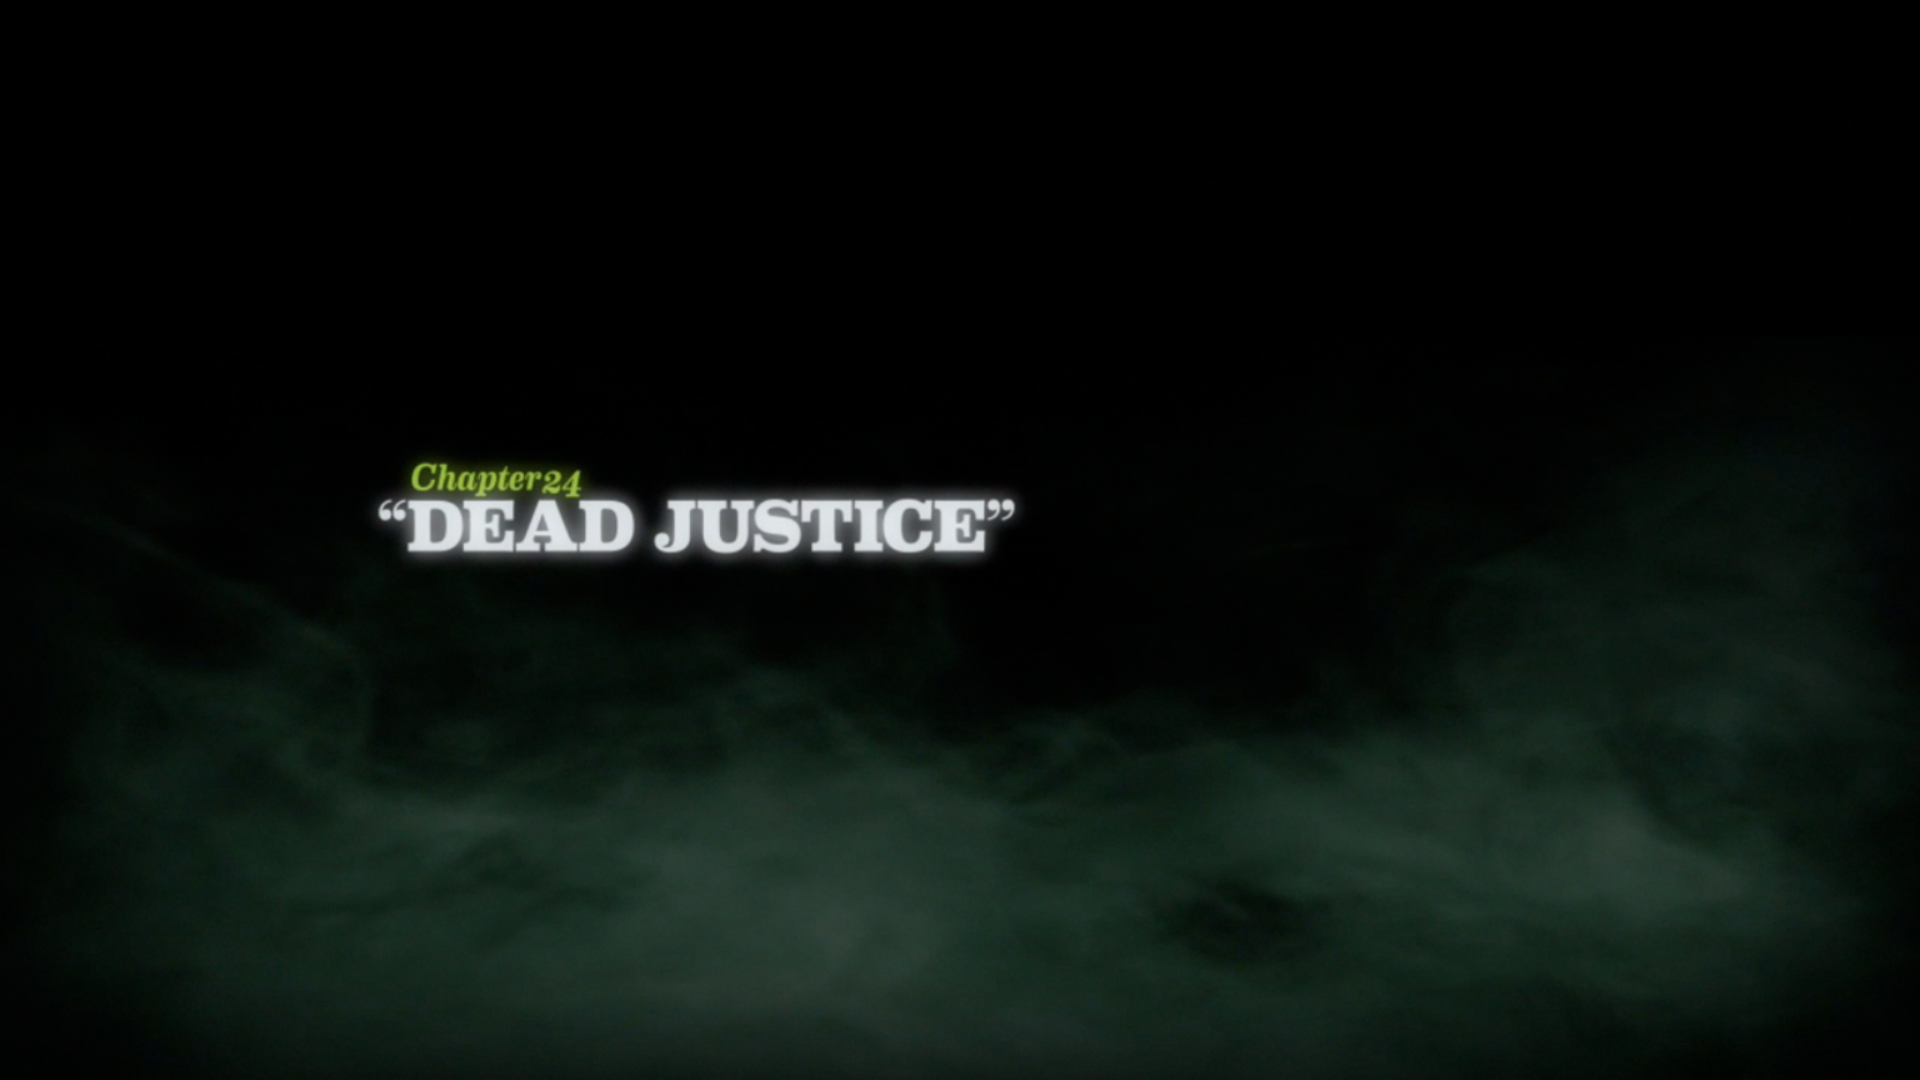 Dead_Justice_title_card